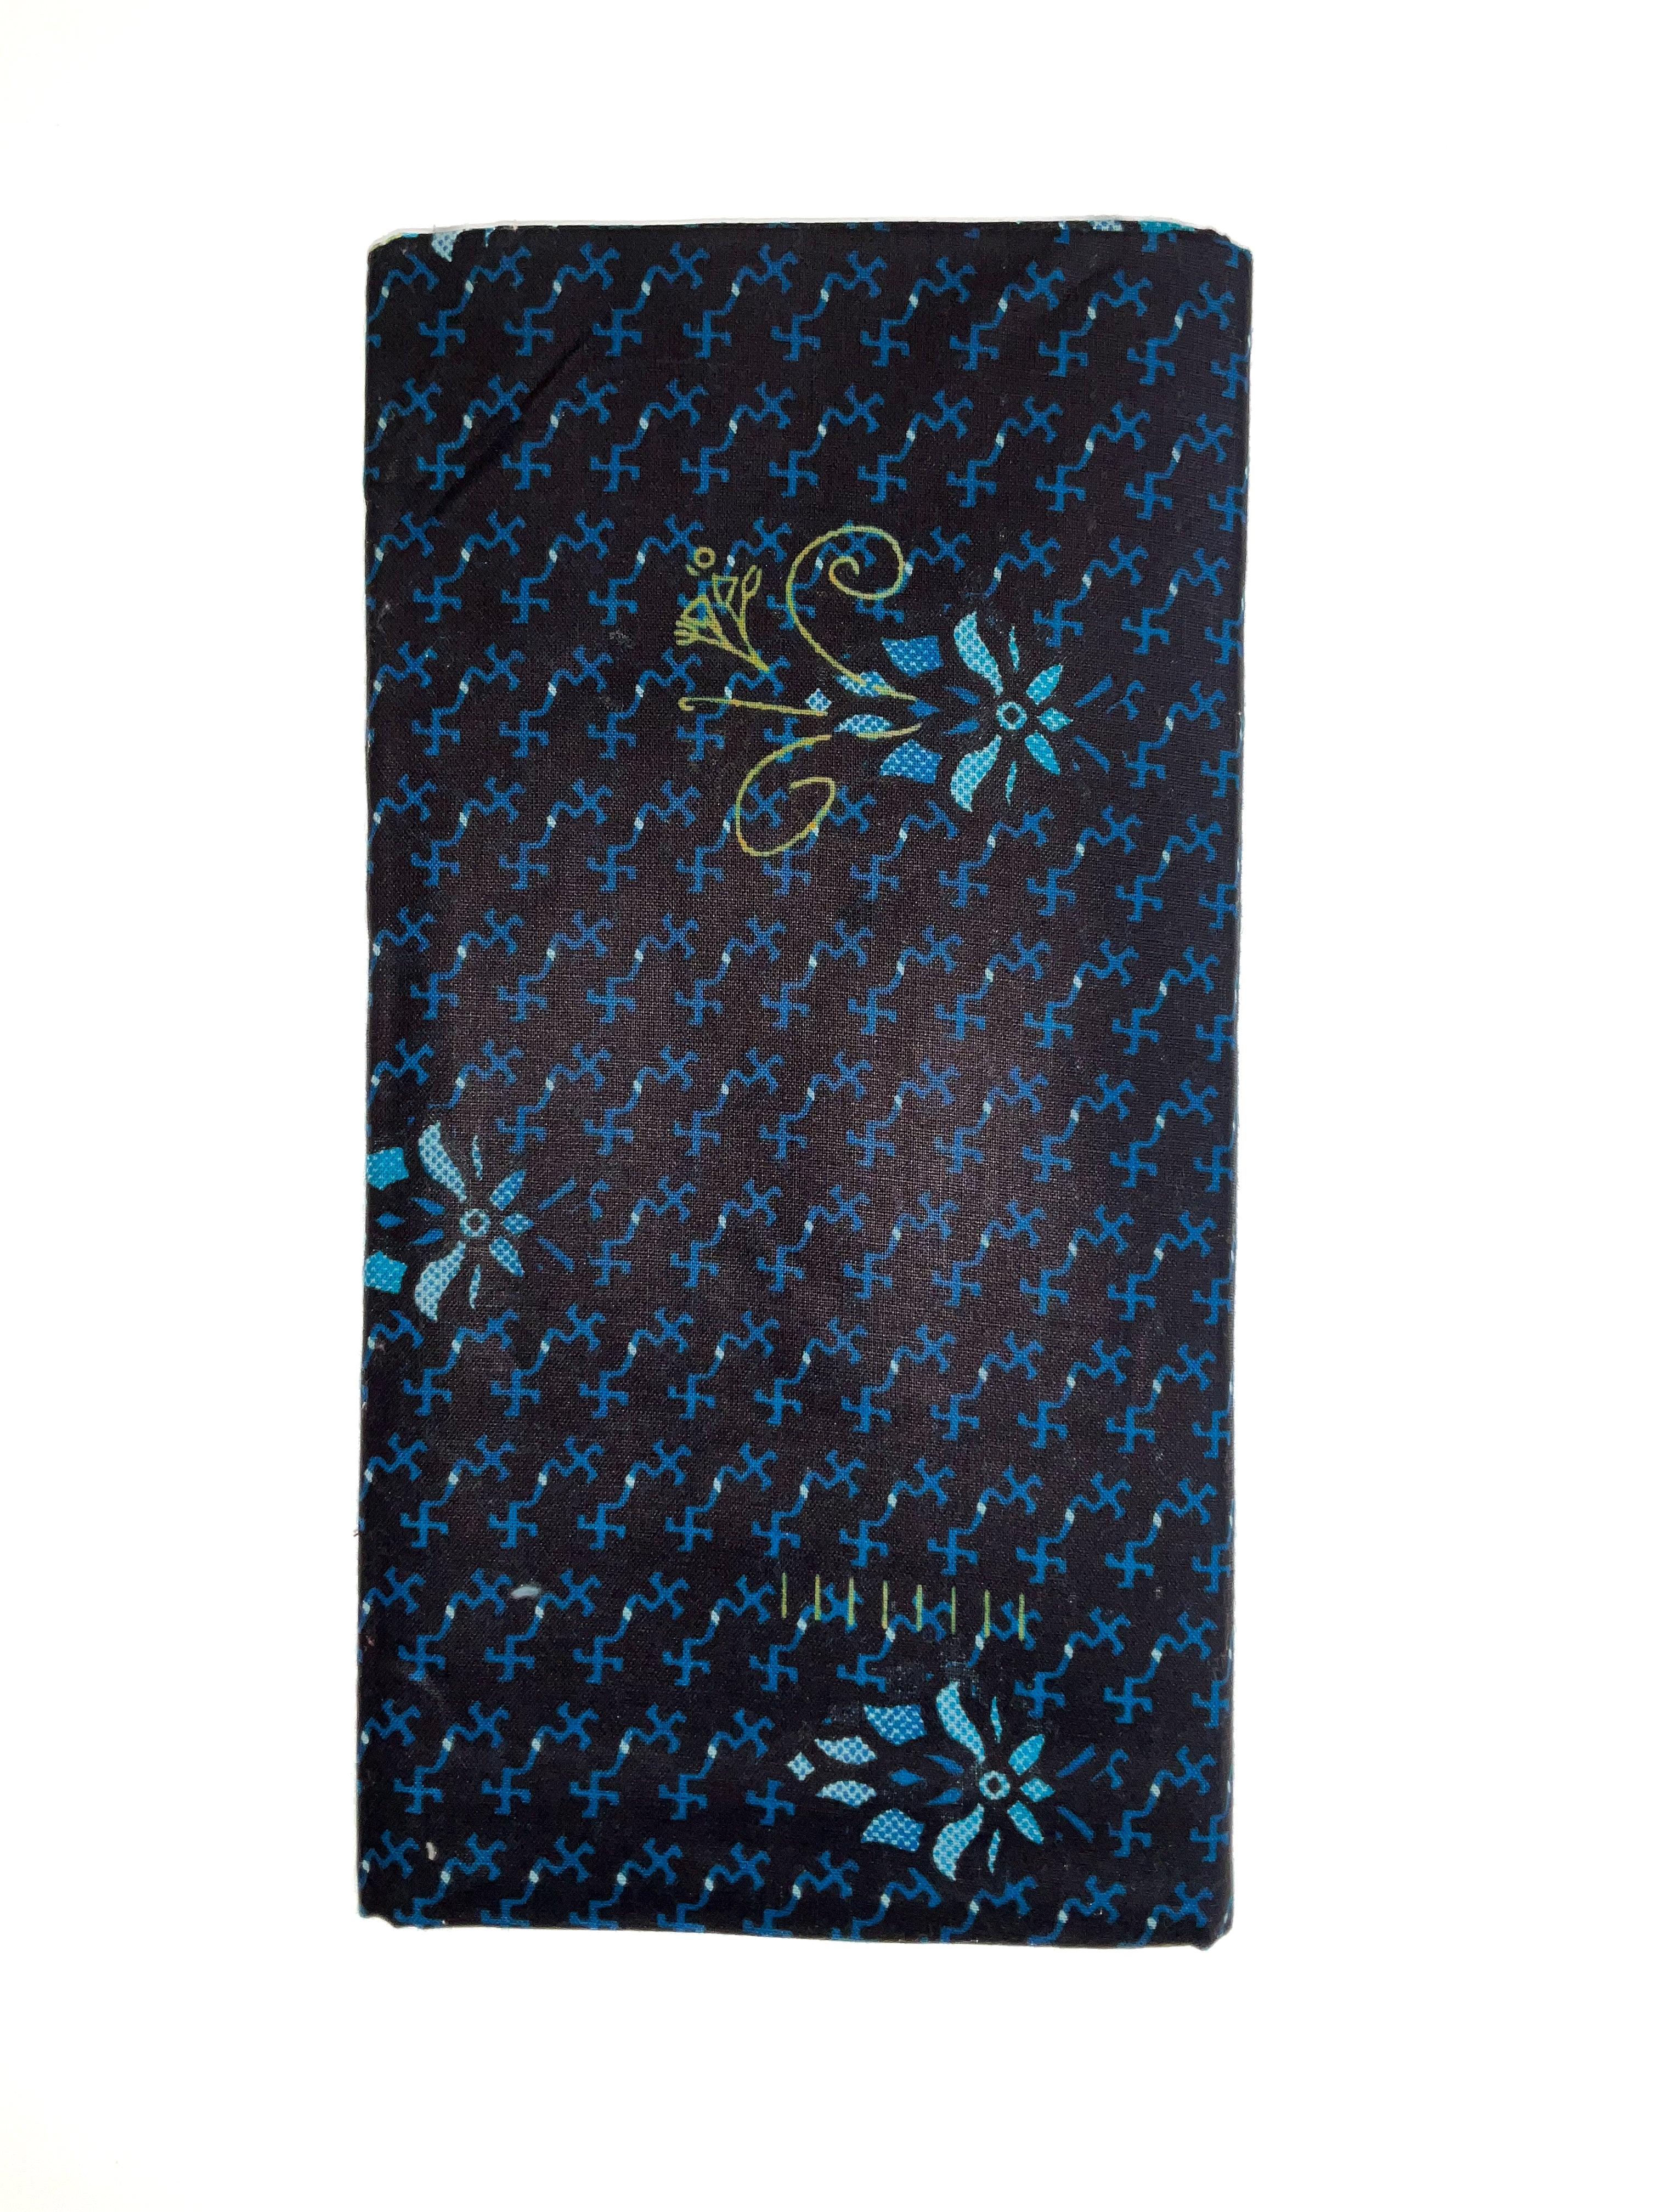 Blue Colour STAR Men’s 100% Cotton Printed Lungi 2m unstitched - www.indiancart.com.au - Lungi - Lungi - Indian Cart